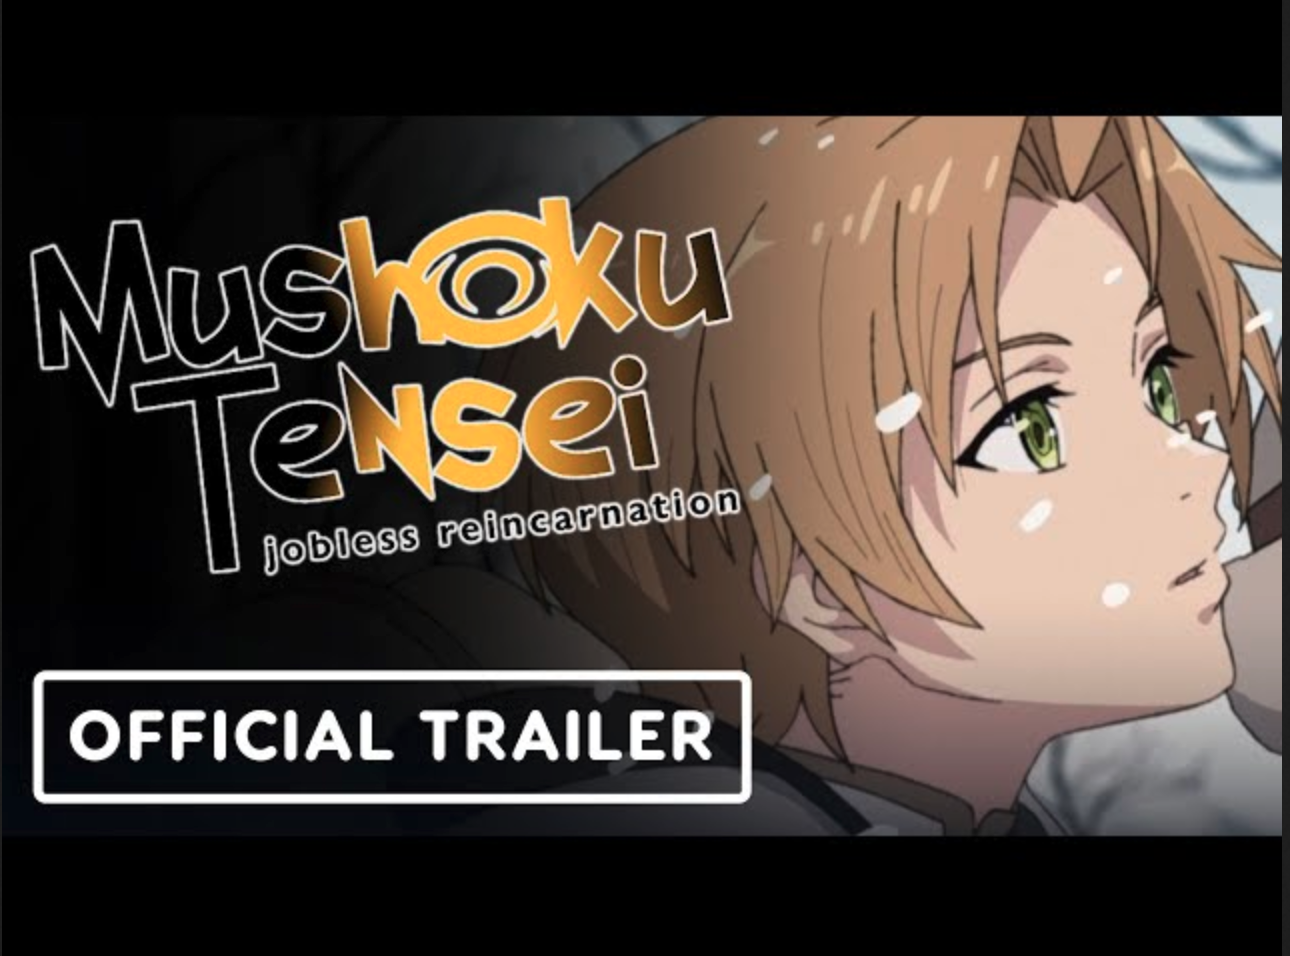 Mushoku Tensei: Jobless Reincarnation Anime Gets New Trailer